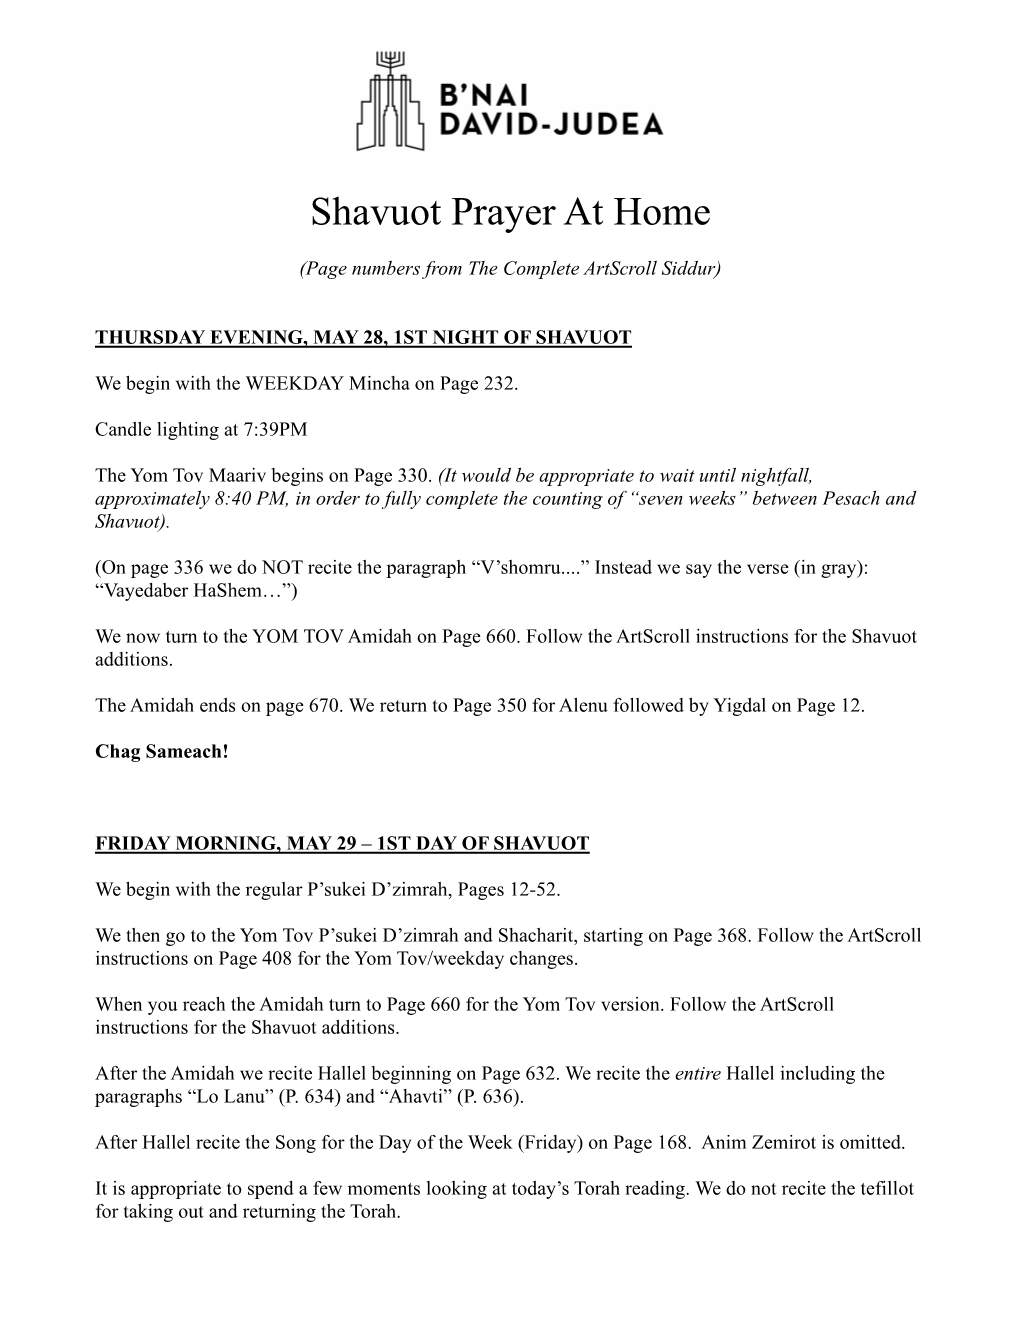 Shavuot Prayer at Home